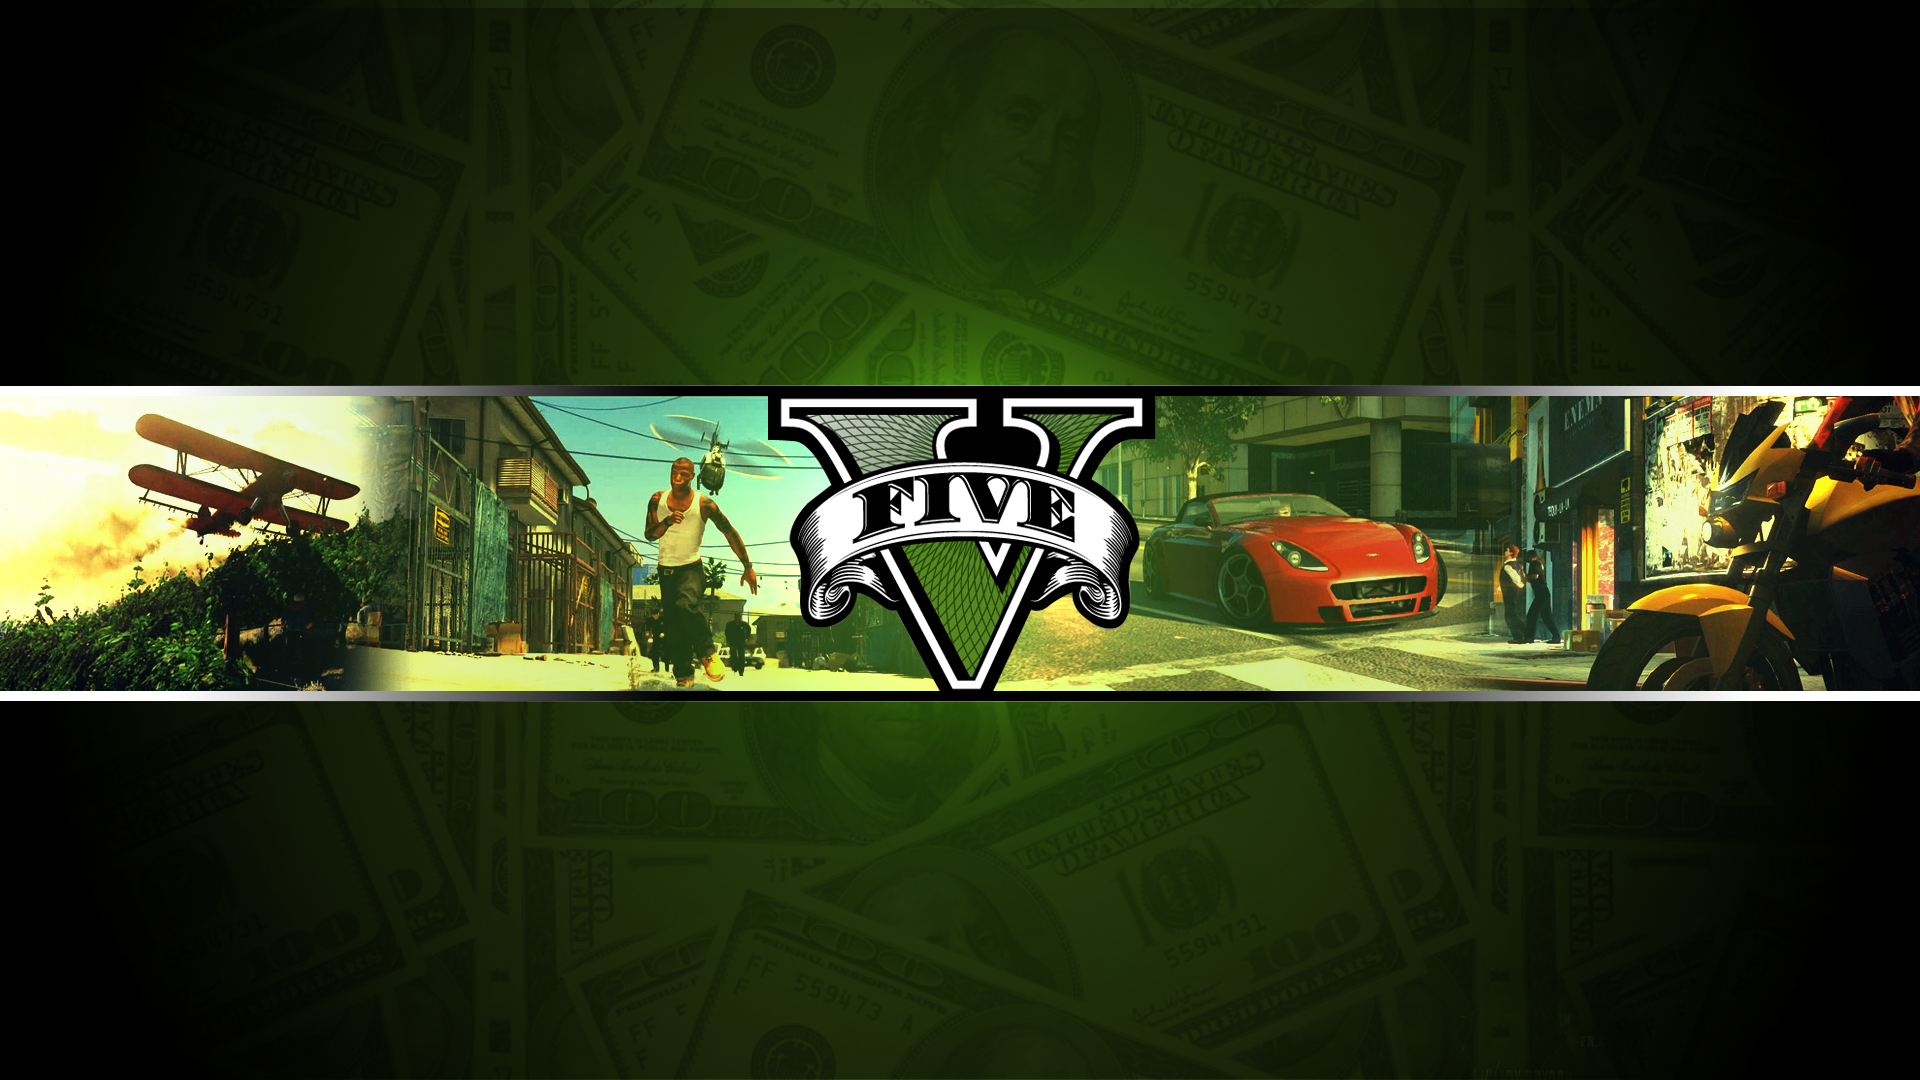 Grand Theft Auto V Background. Grand